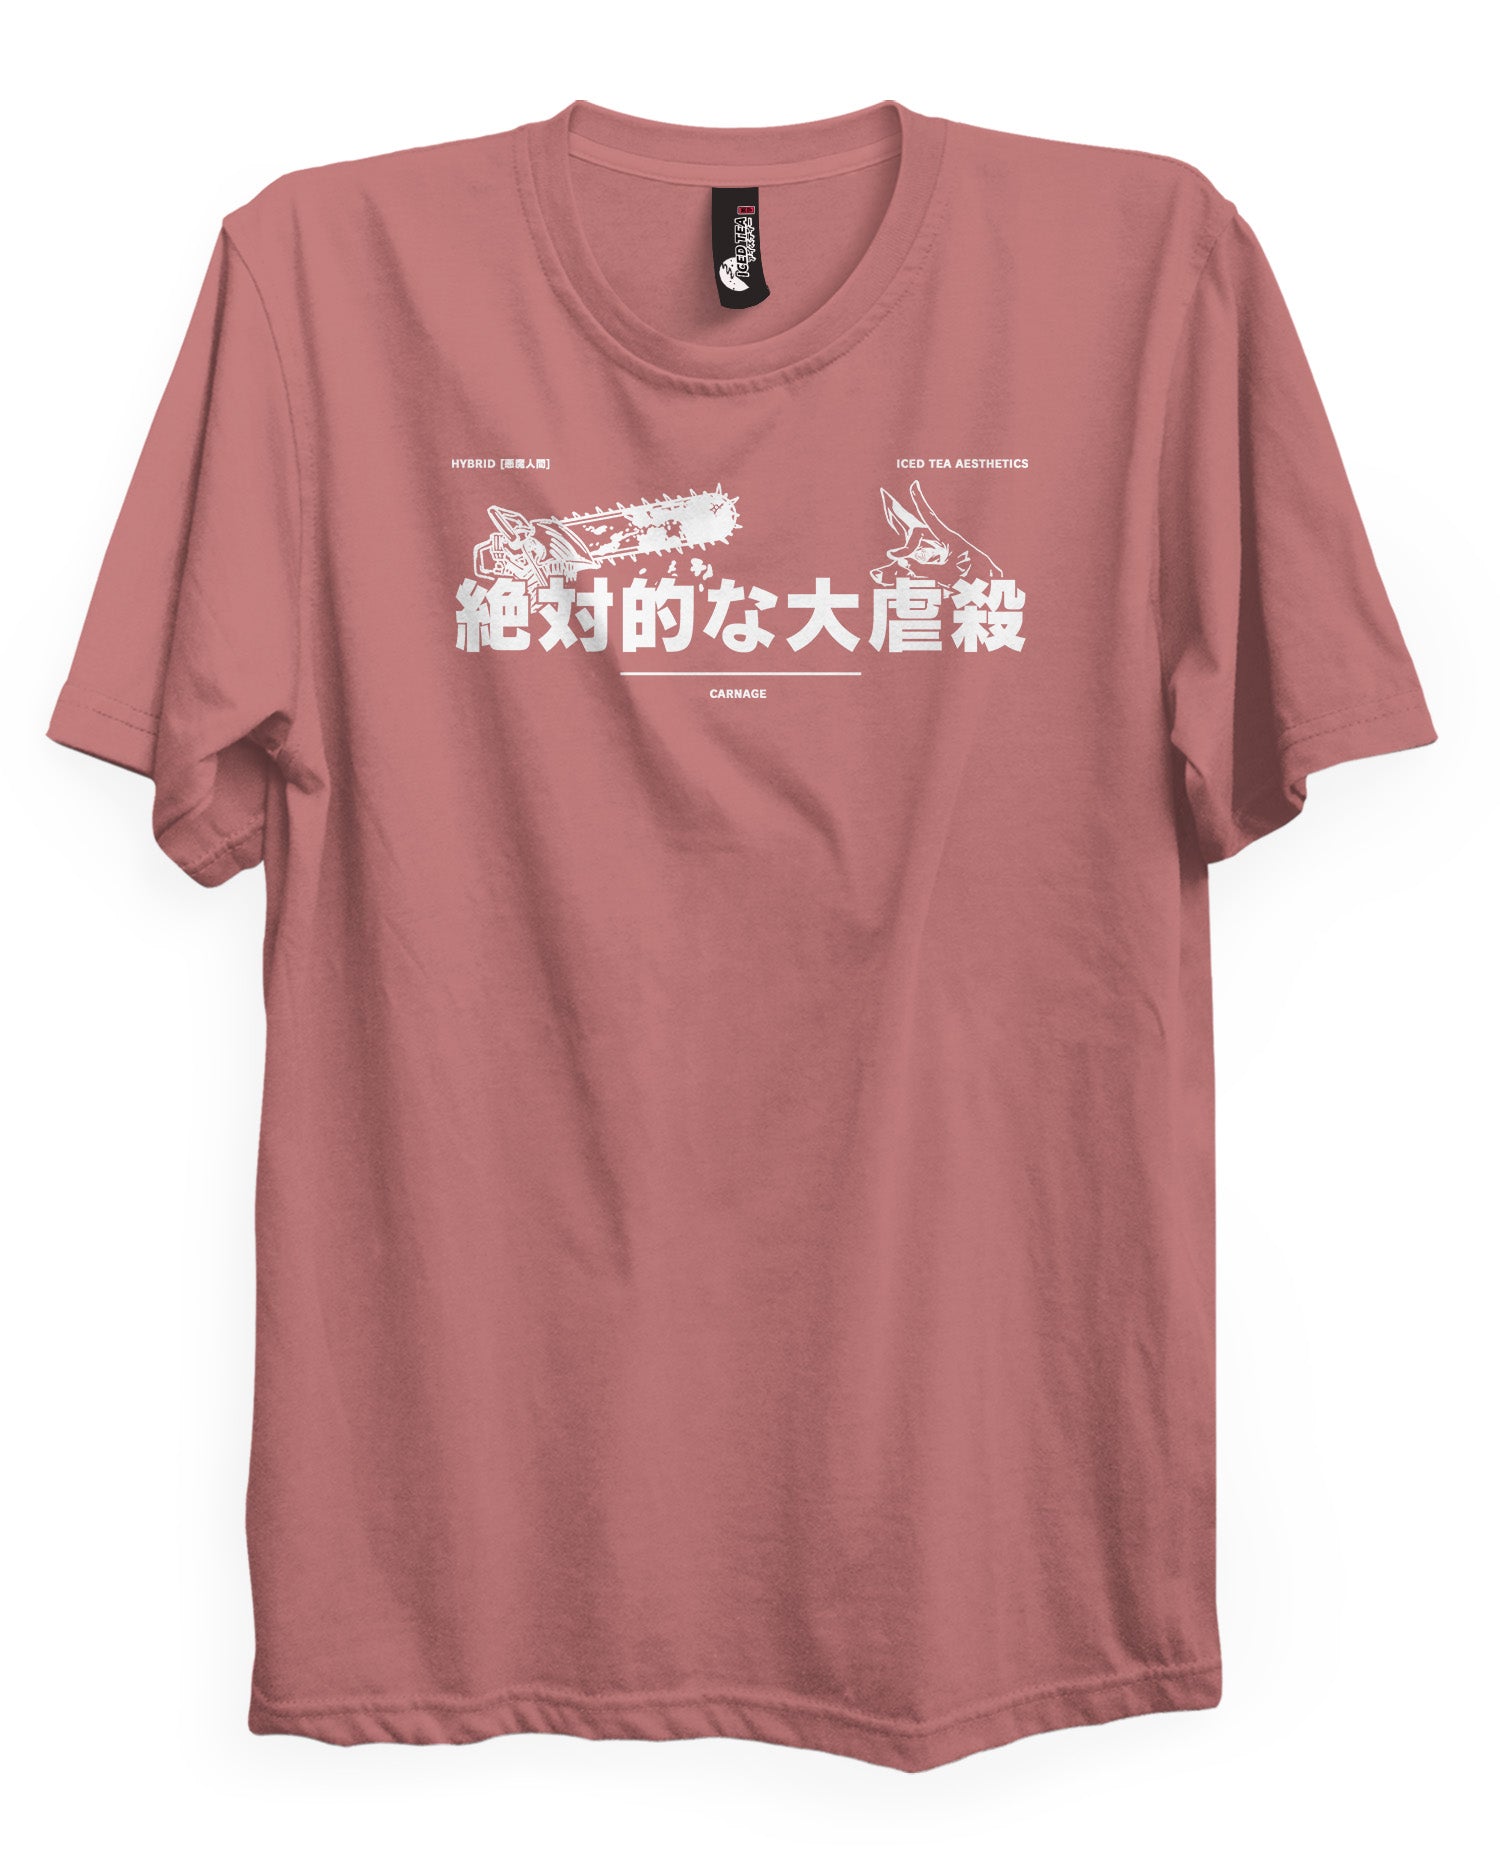 CARNAGE - T-Shirt Back Print